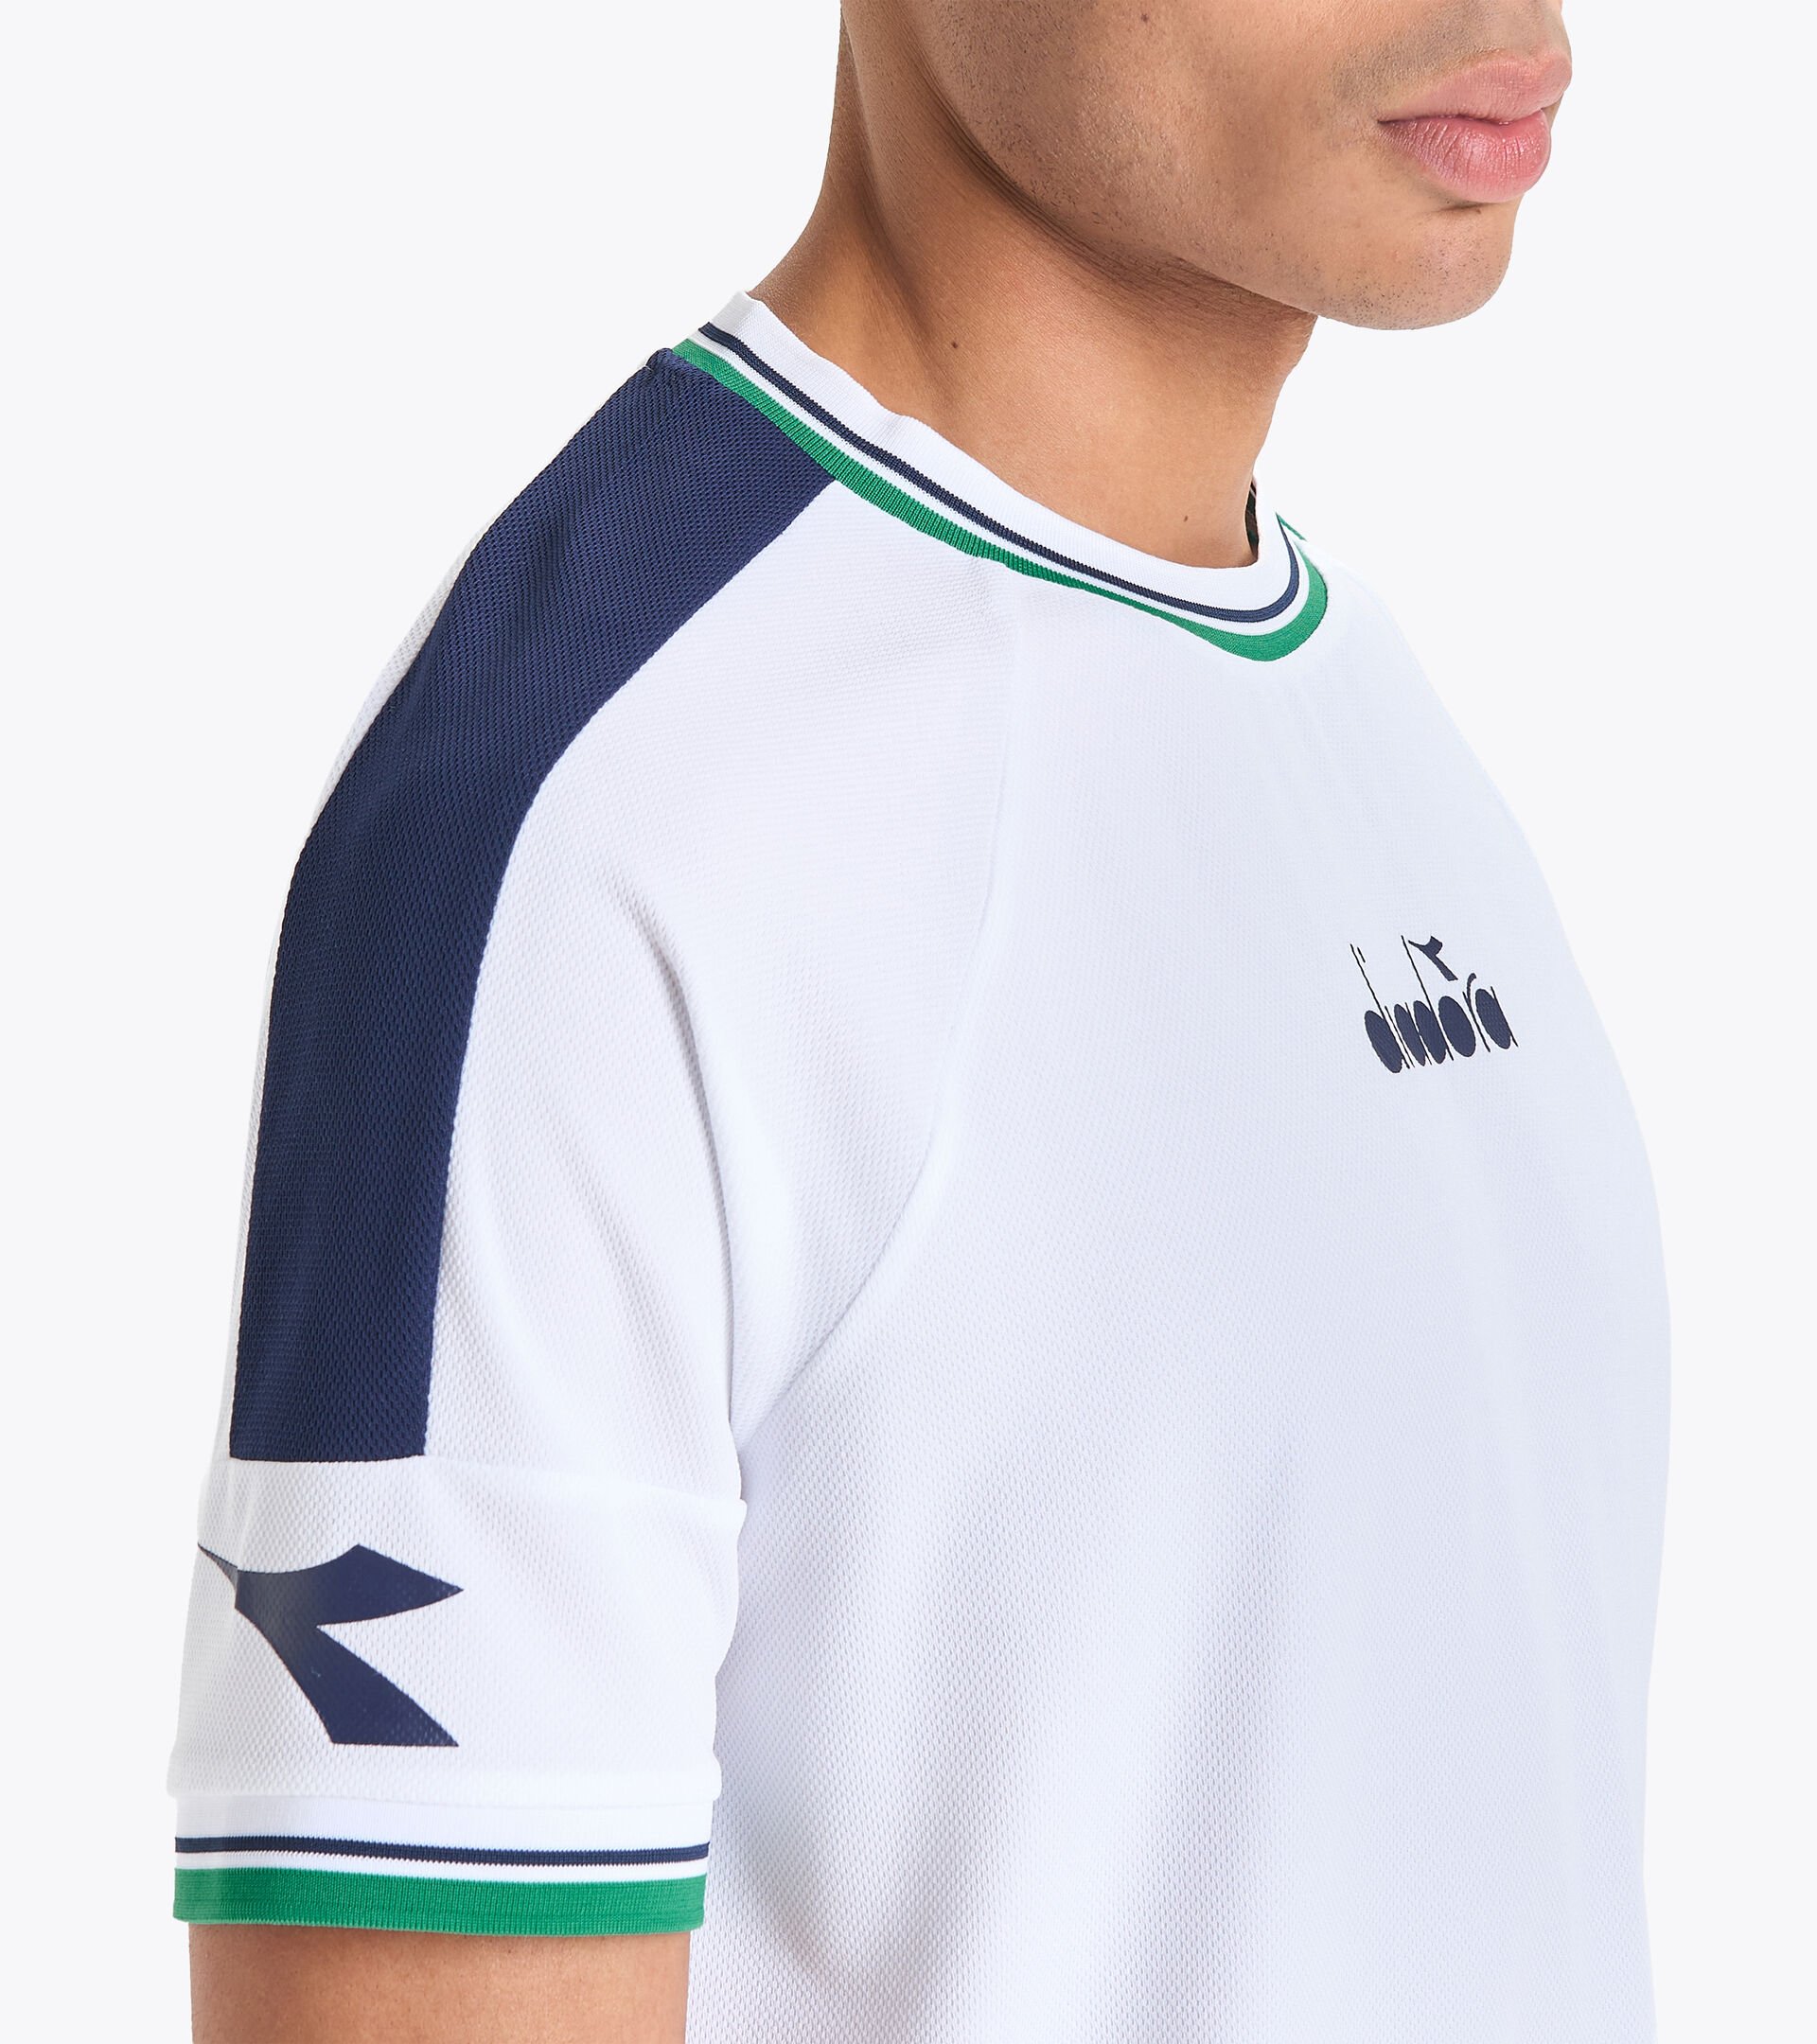 Tennis t-shirt - Men SS T-SHIRT ICON OPTICAL WHITE - Diadora